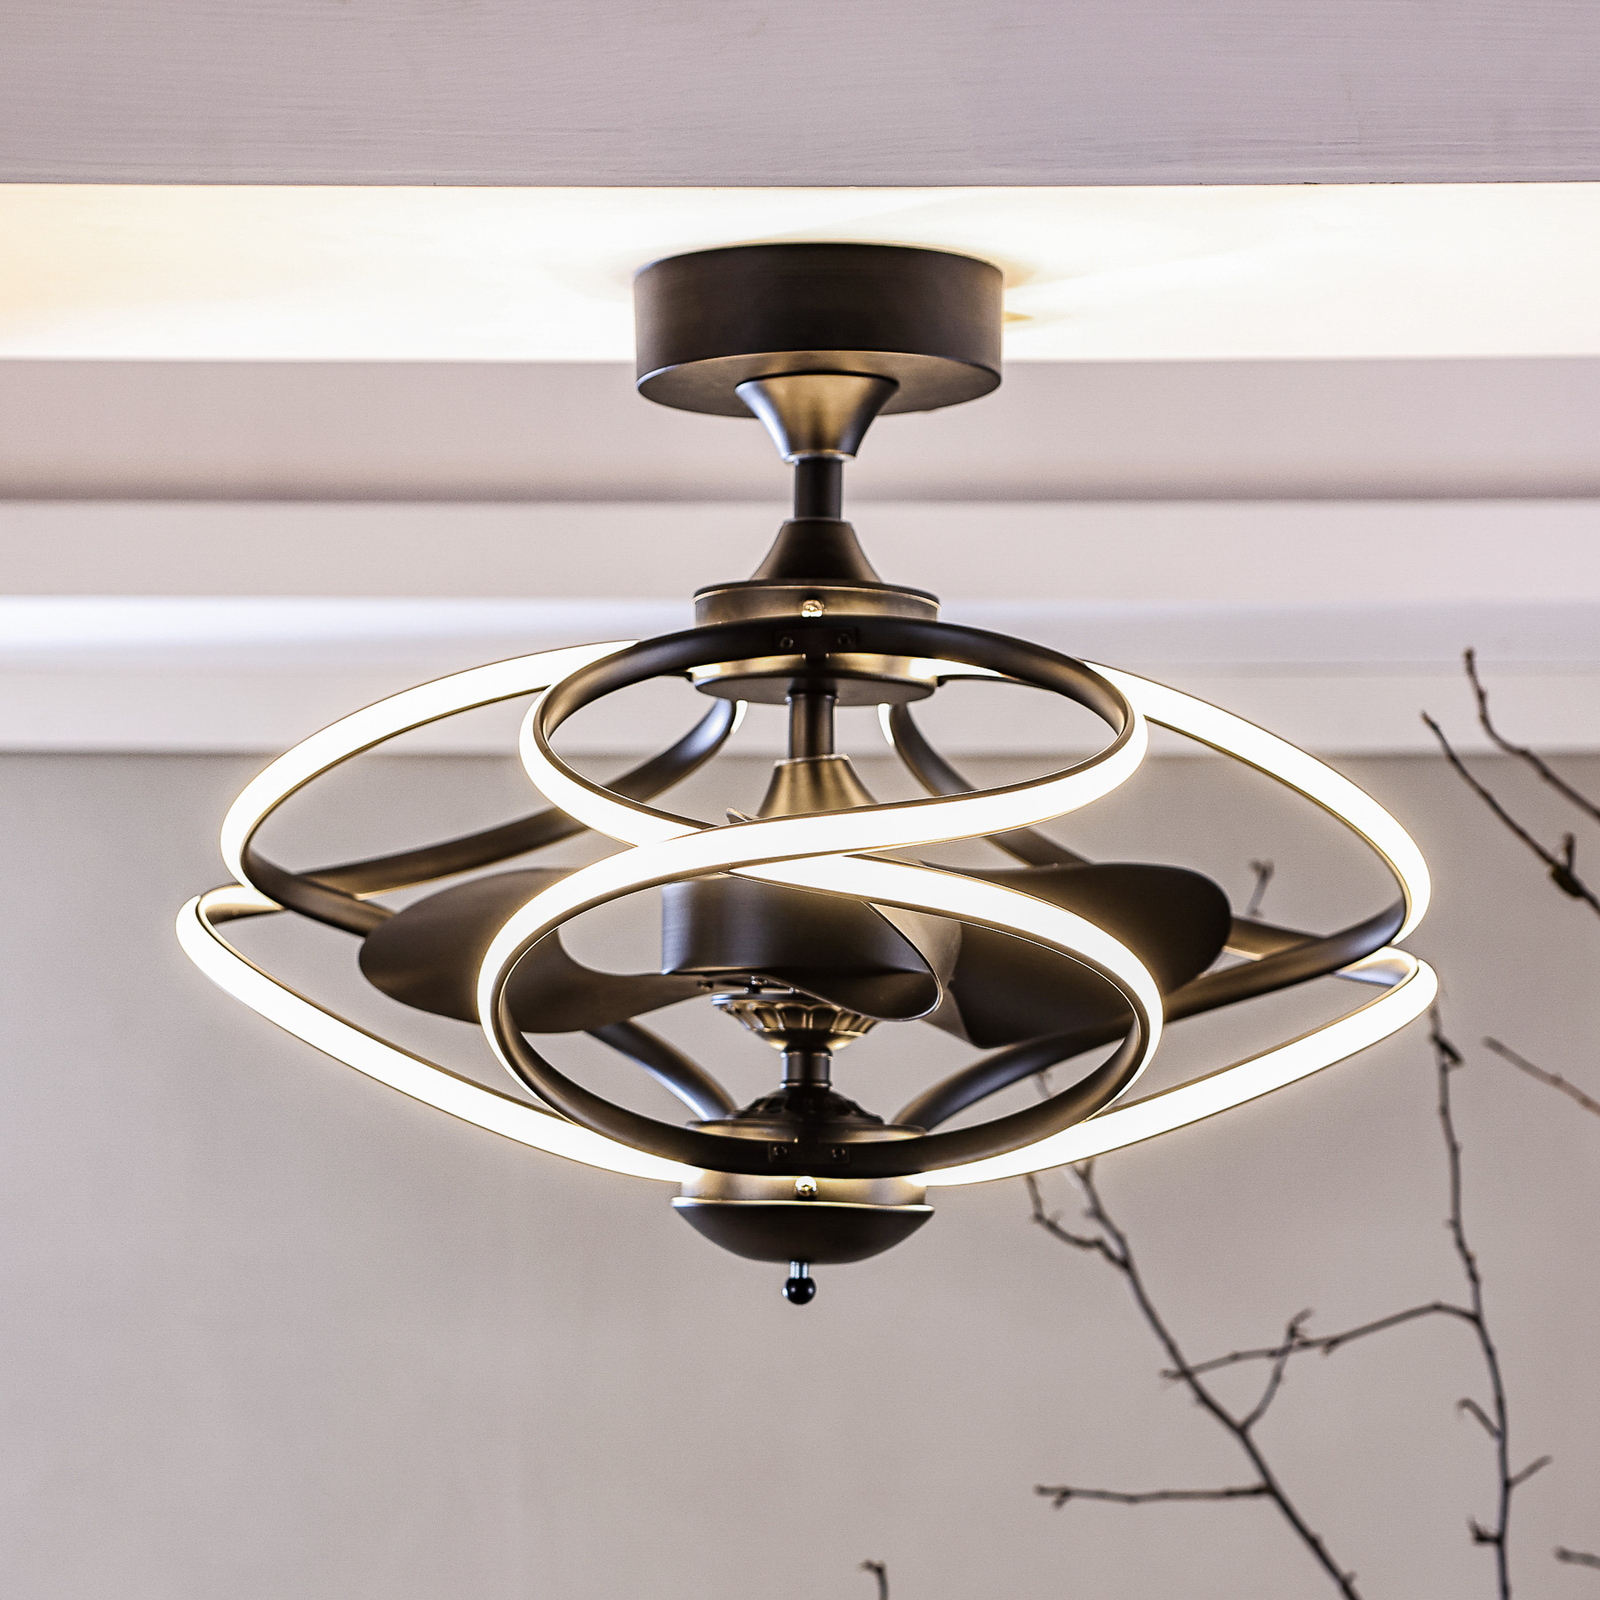 Starluna Harisa LED ceiling fan, illuminated